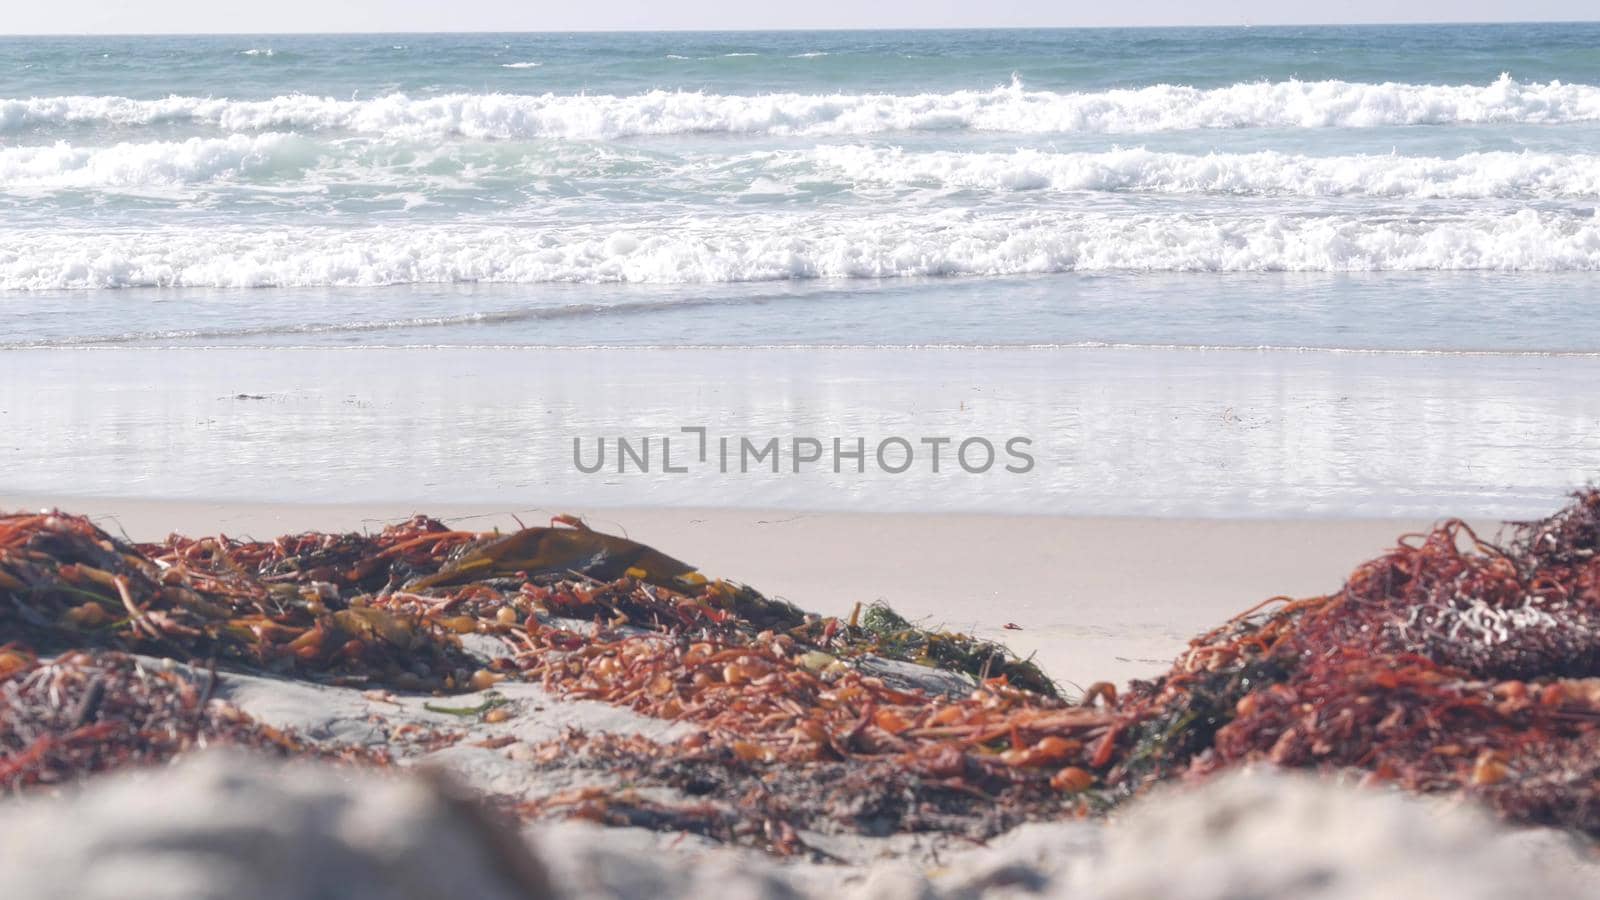 Big blue ocean waves crashing on beach, California pacific coast, USA. Sea water foam, kelp seaweed algae and white sand. Summertime shore aesthetic seascape. Surfing vibe. Seamless looped cinemagraph